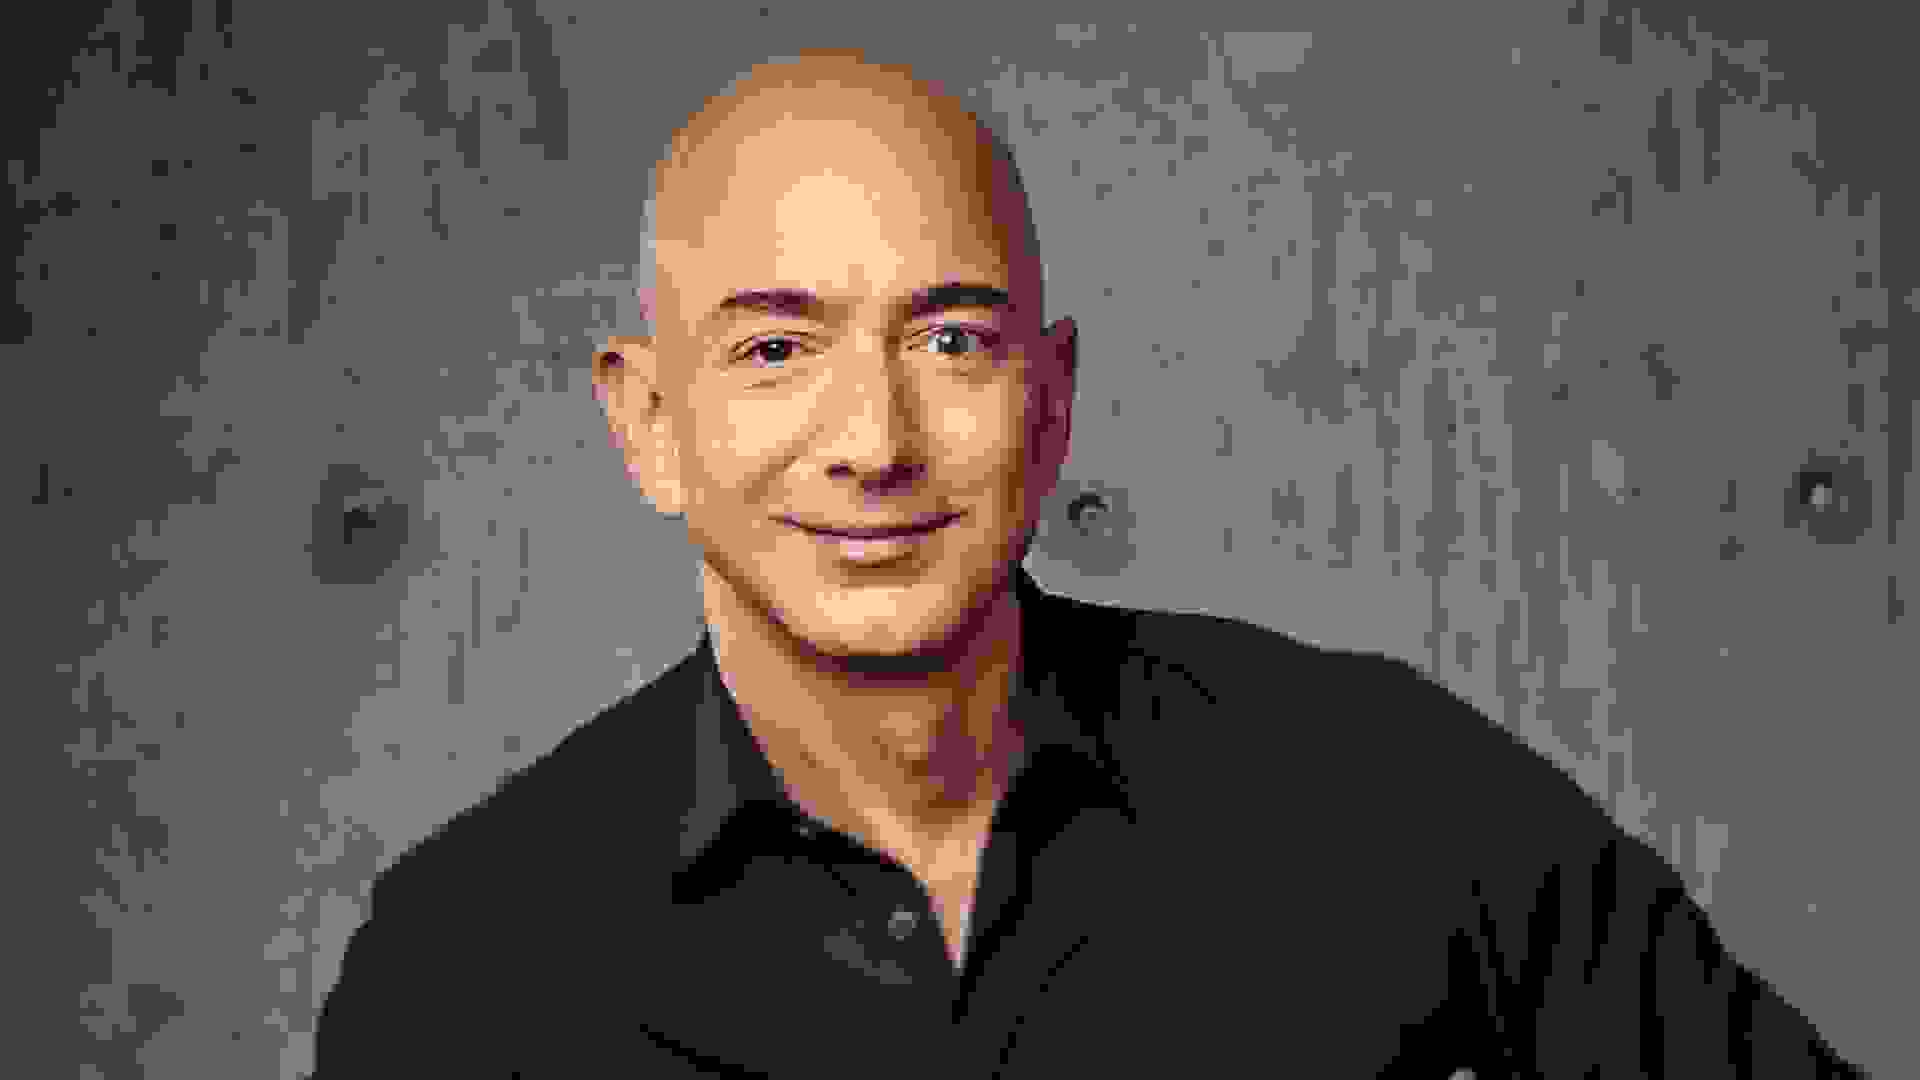 Jeff Bezos Amazon Founder and CEO